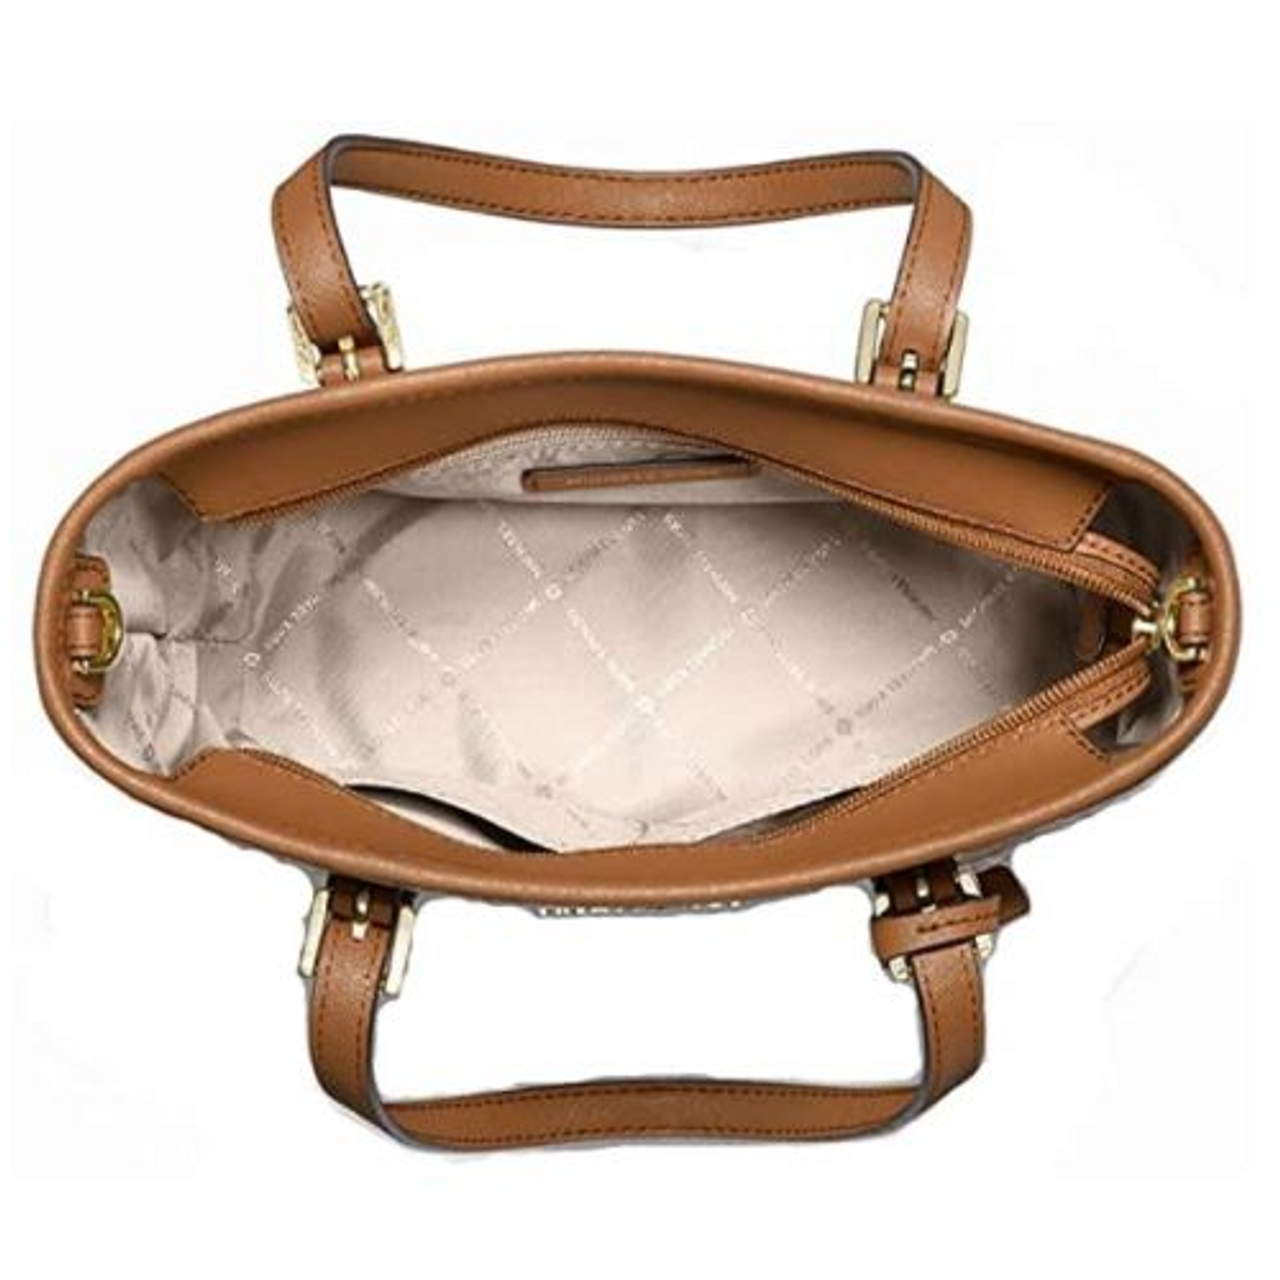 MIchael Kors Jet Set Travel Tote Handbag Brown & White Charm Top Zip E-1403